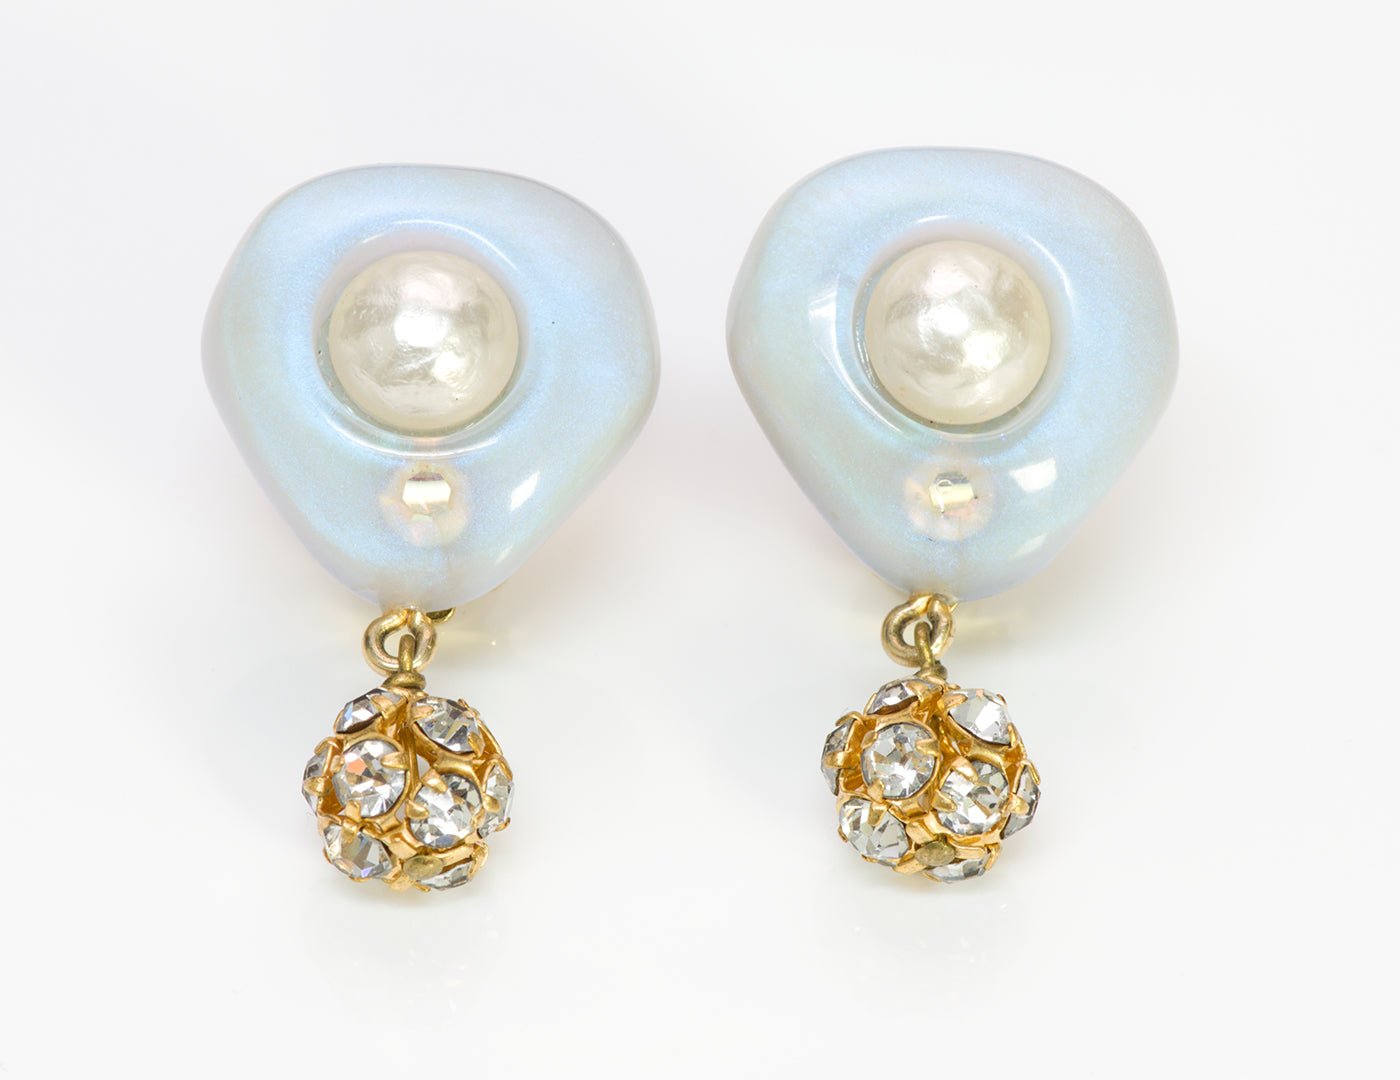 Chanel 1996 Pearl Crystal Earrings